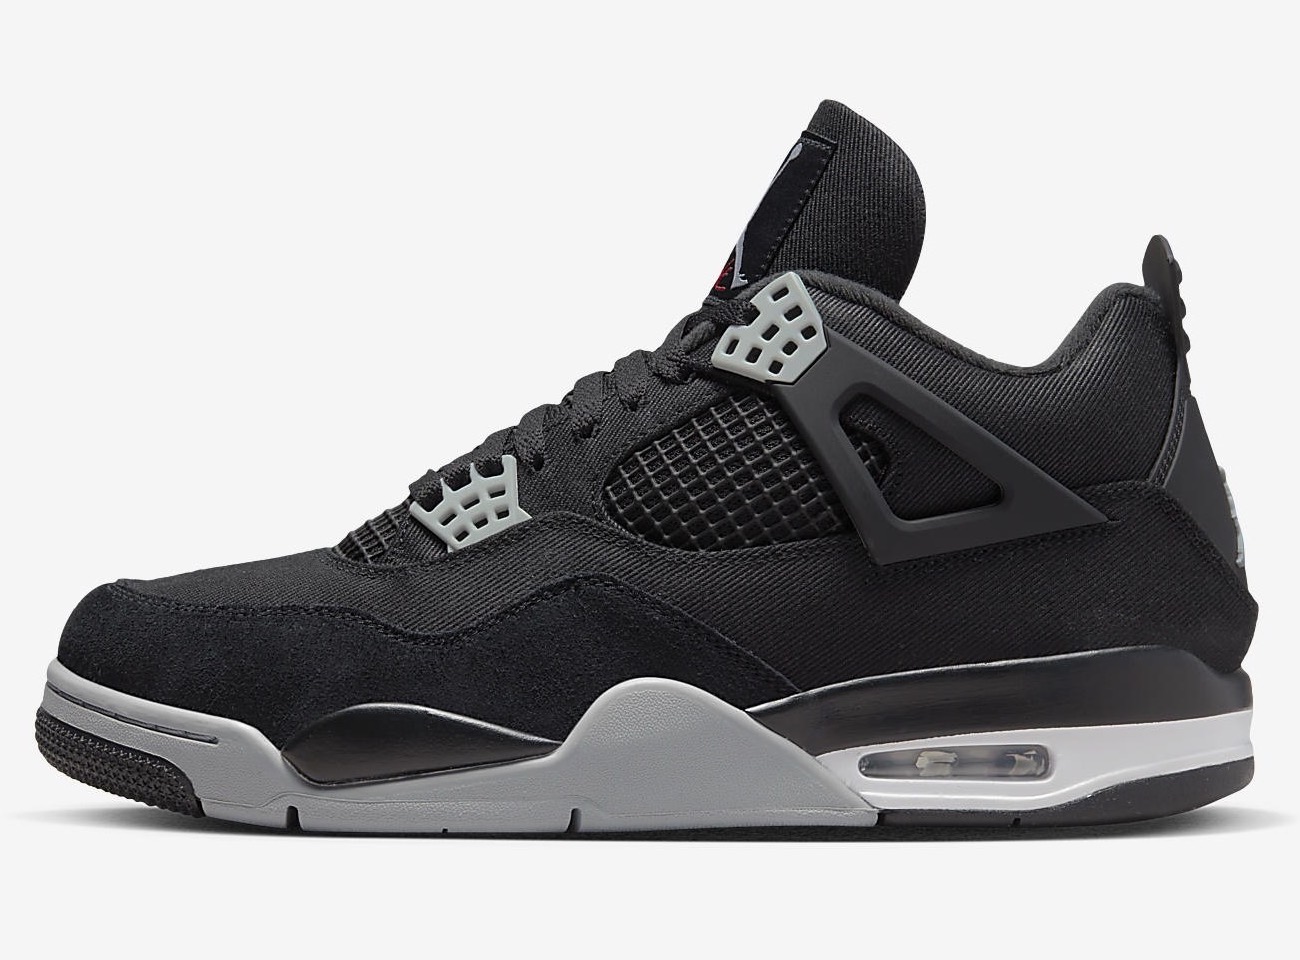 Official Look At The Air Jordan 4 Retro "Black Canvas" Sneaker Buzz